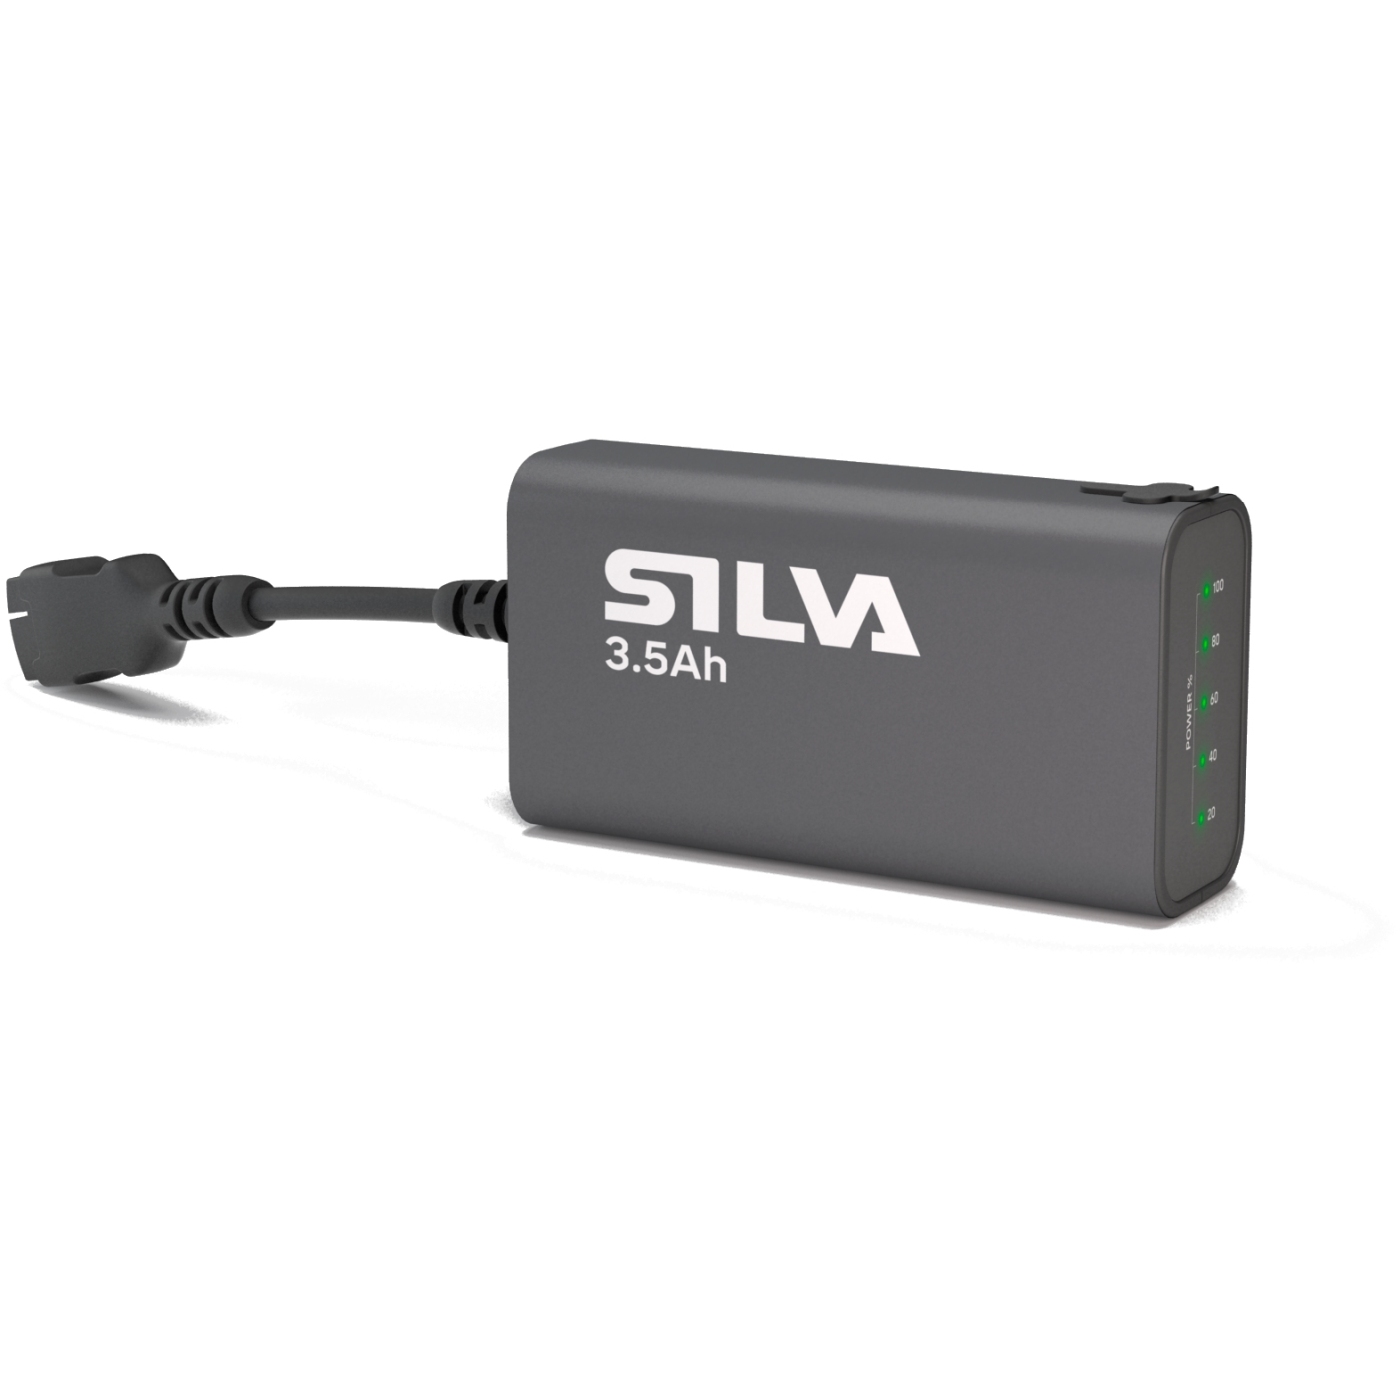 Produktbild von Silva Battery 3.5Ah Batterie